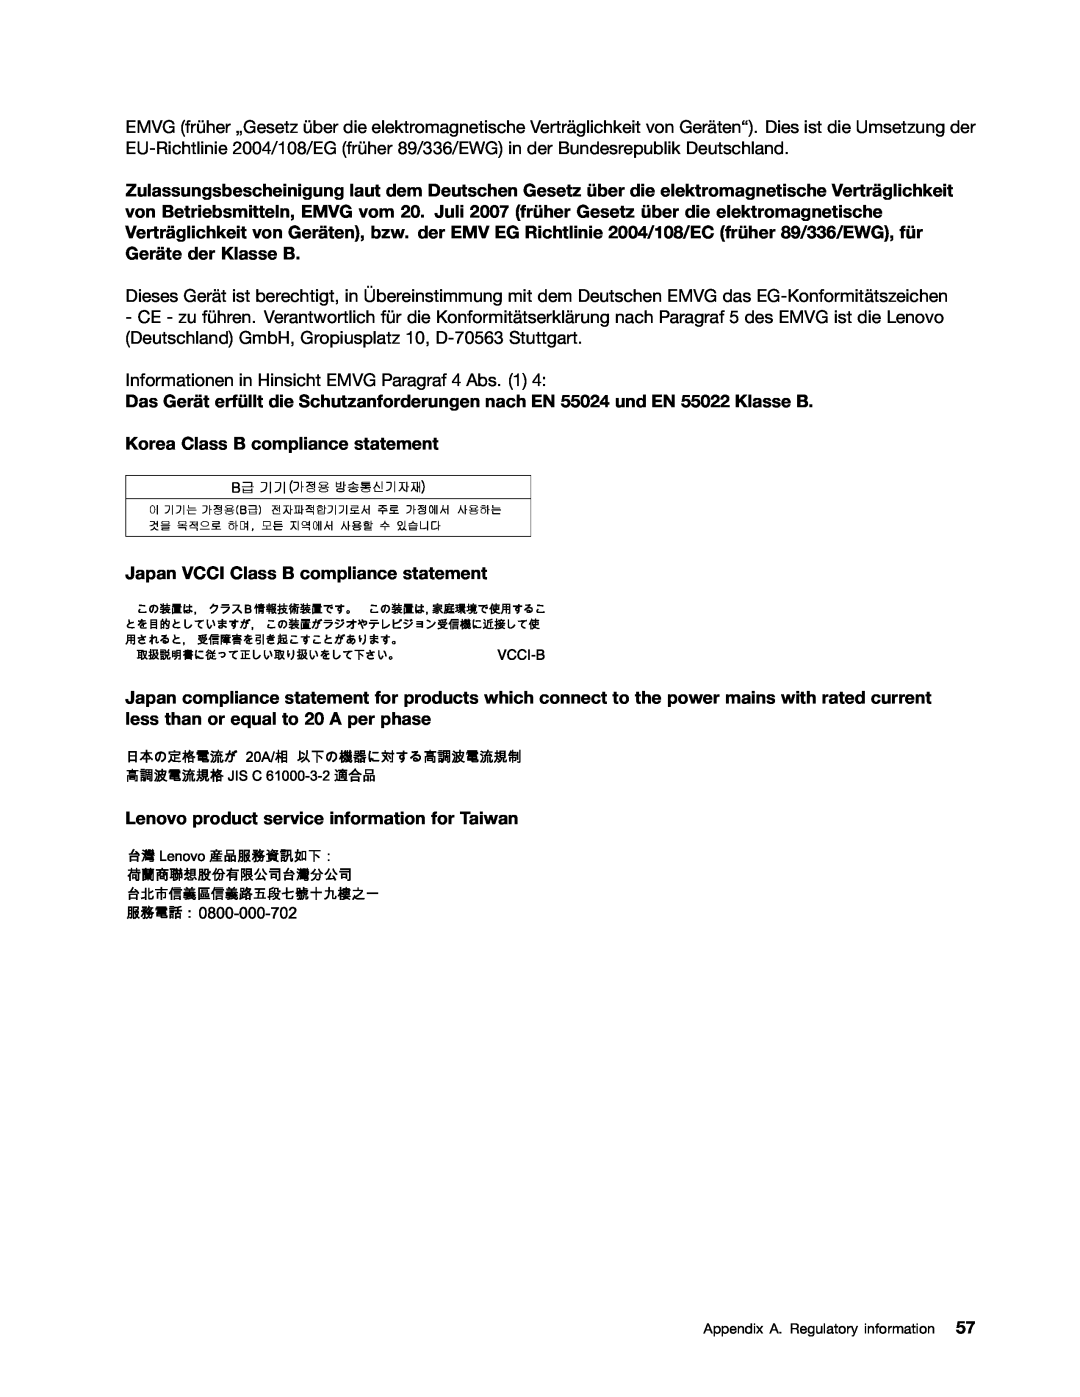 Lenovo 59366616 manual Korea Class B compliance statement, Japan VCCI Class B compliance statement 